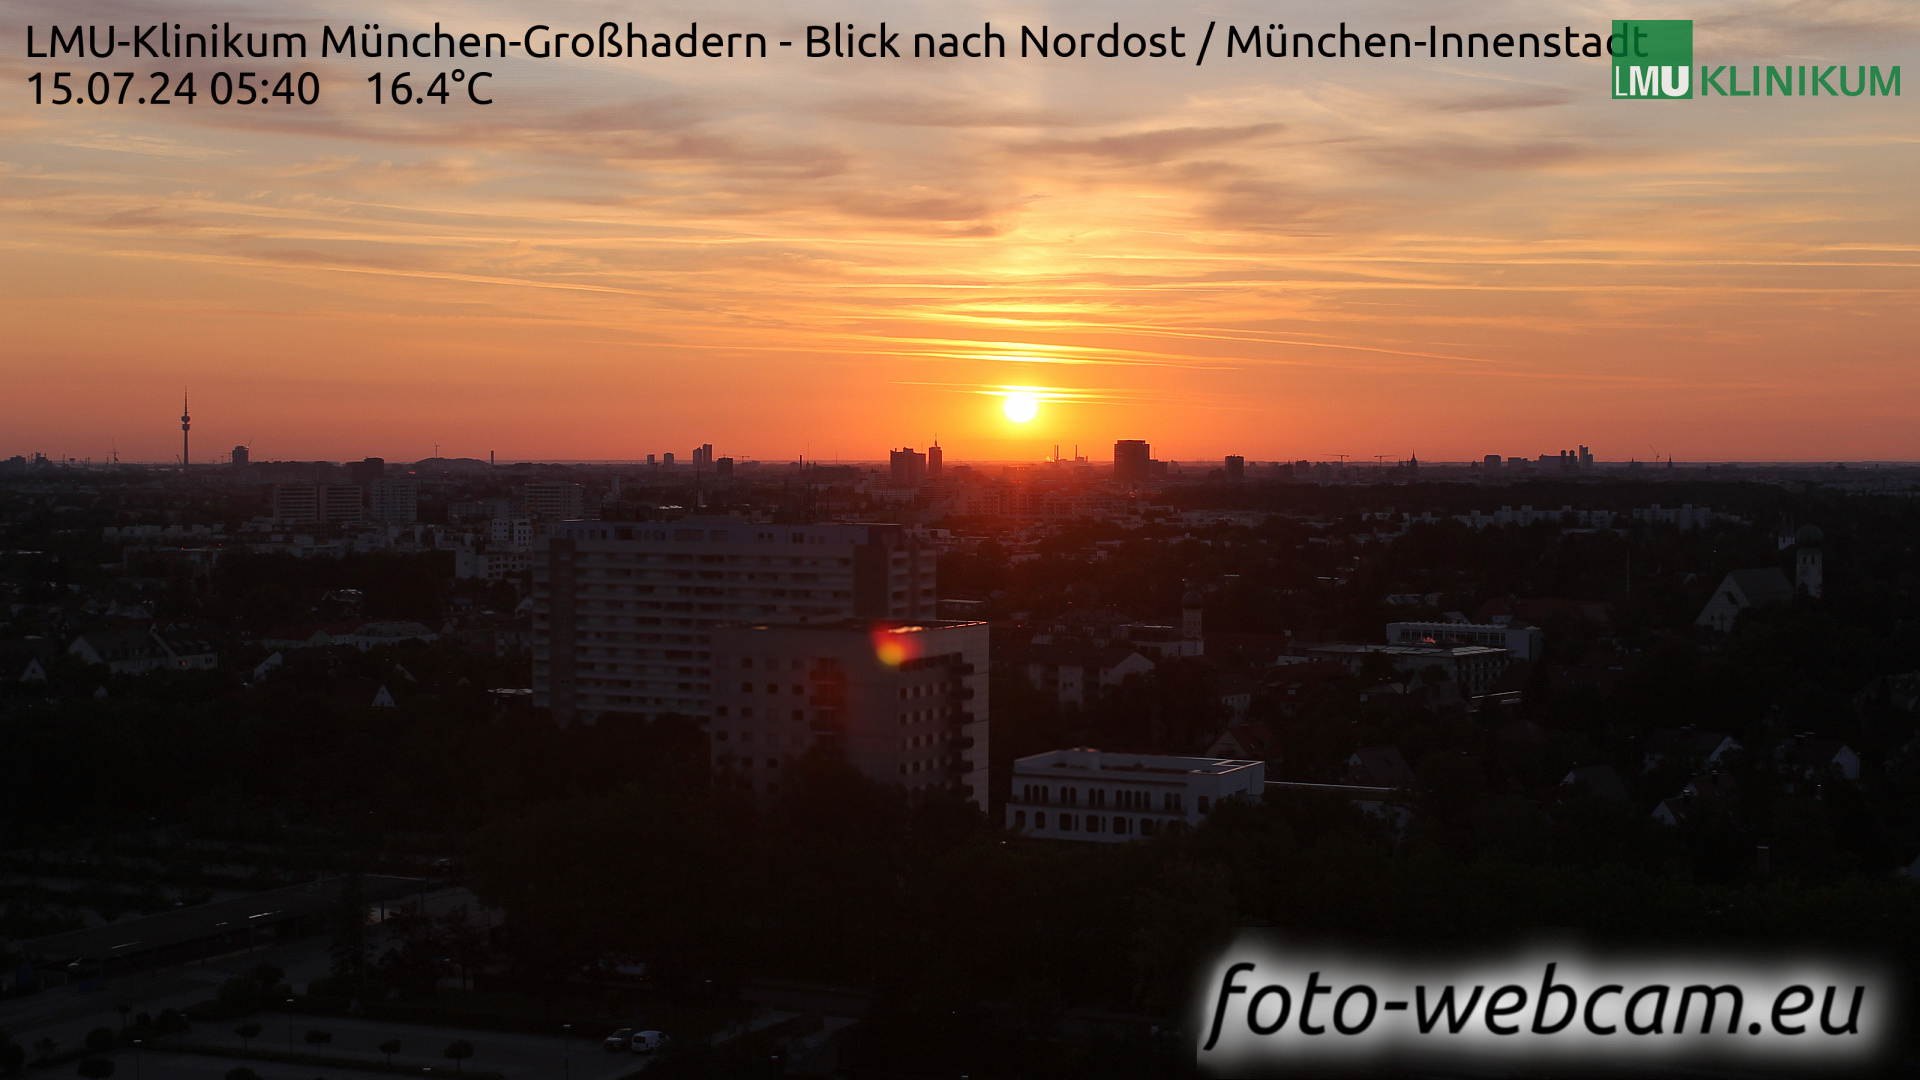 Munich Dom. 05:46